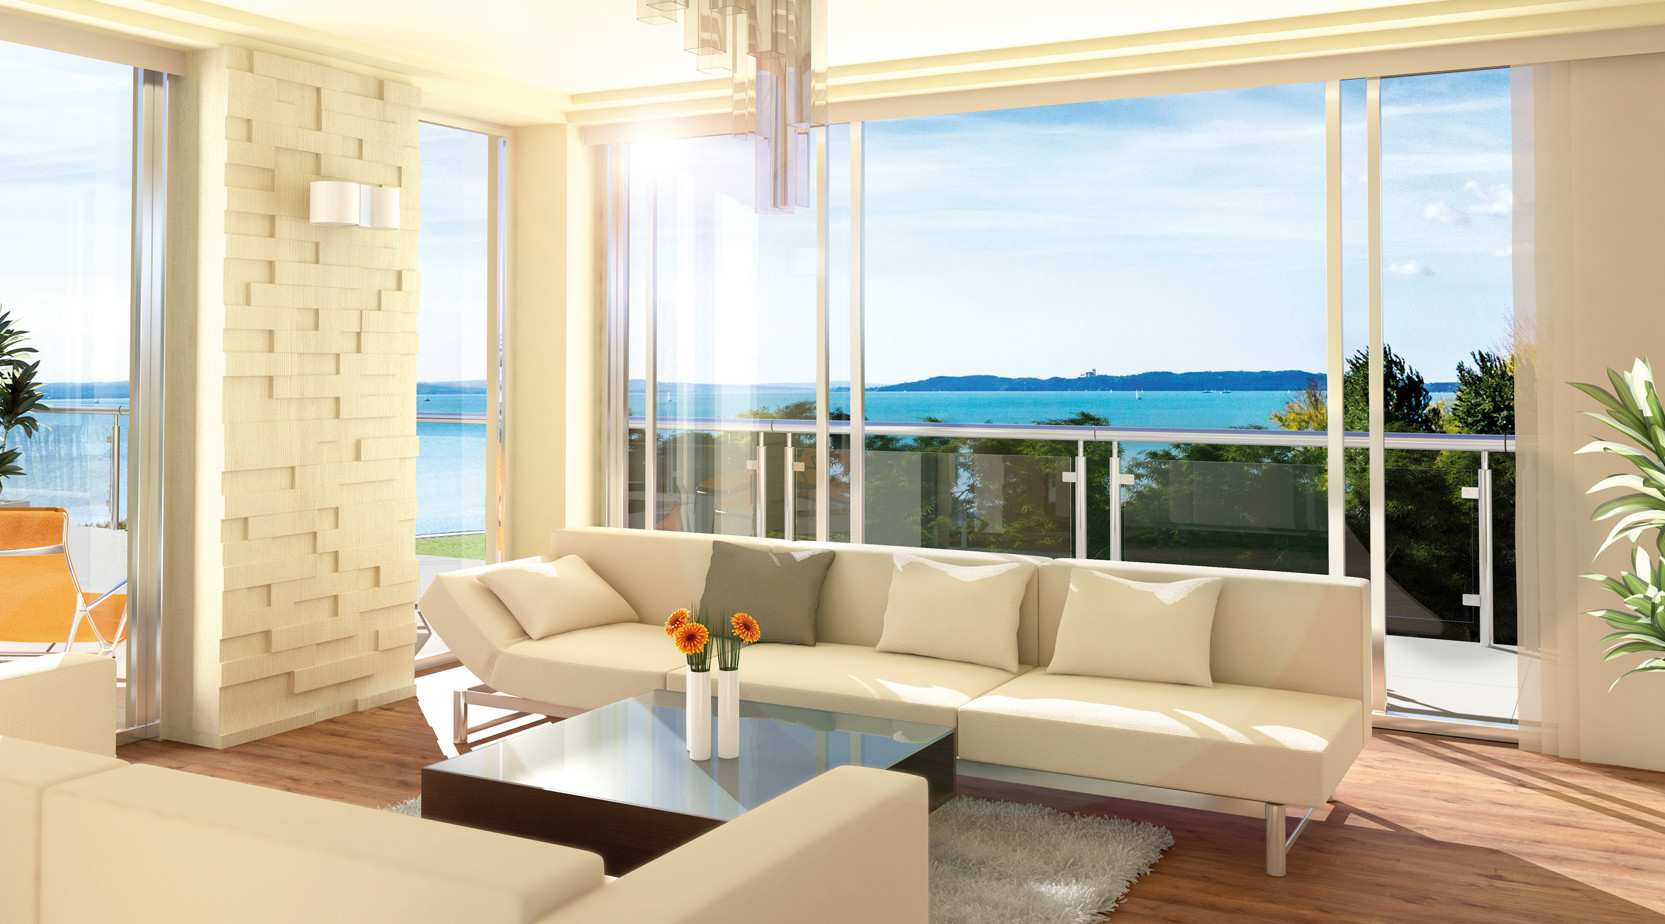 Pelso Bay Luxus apartman